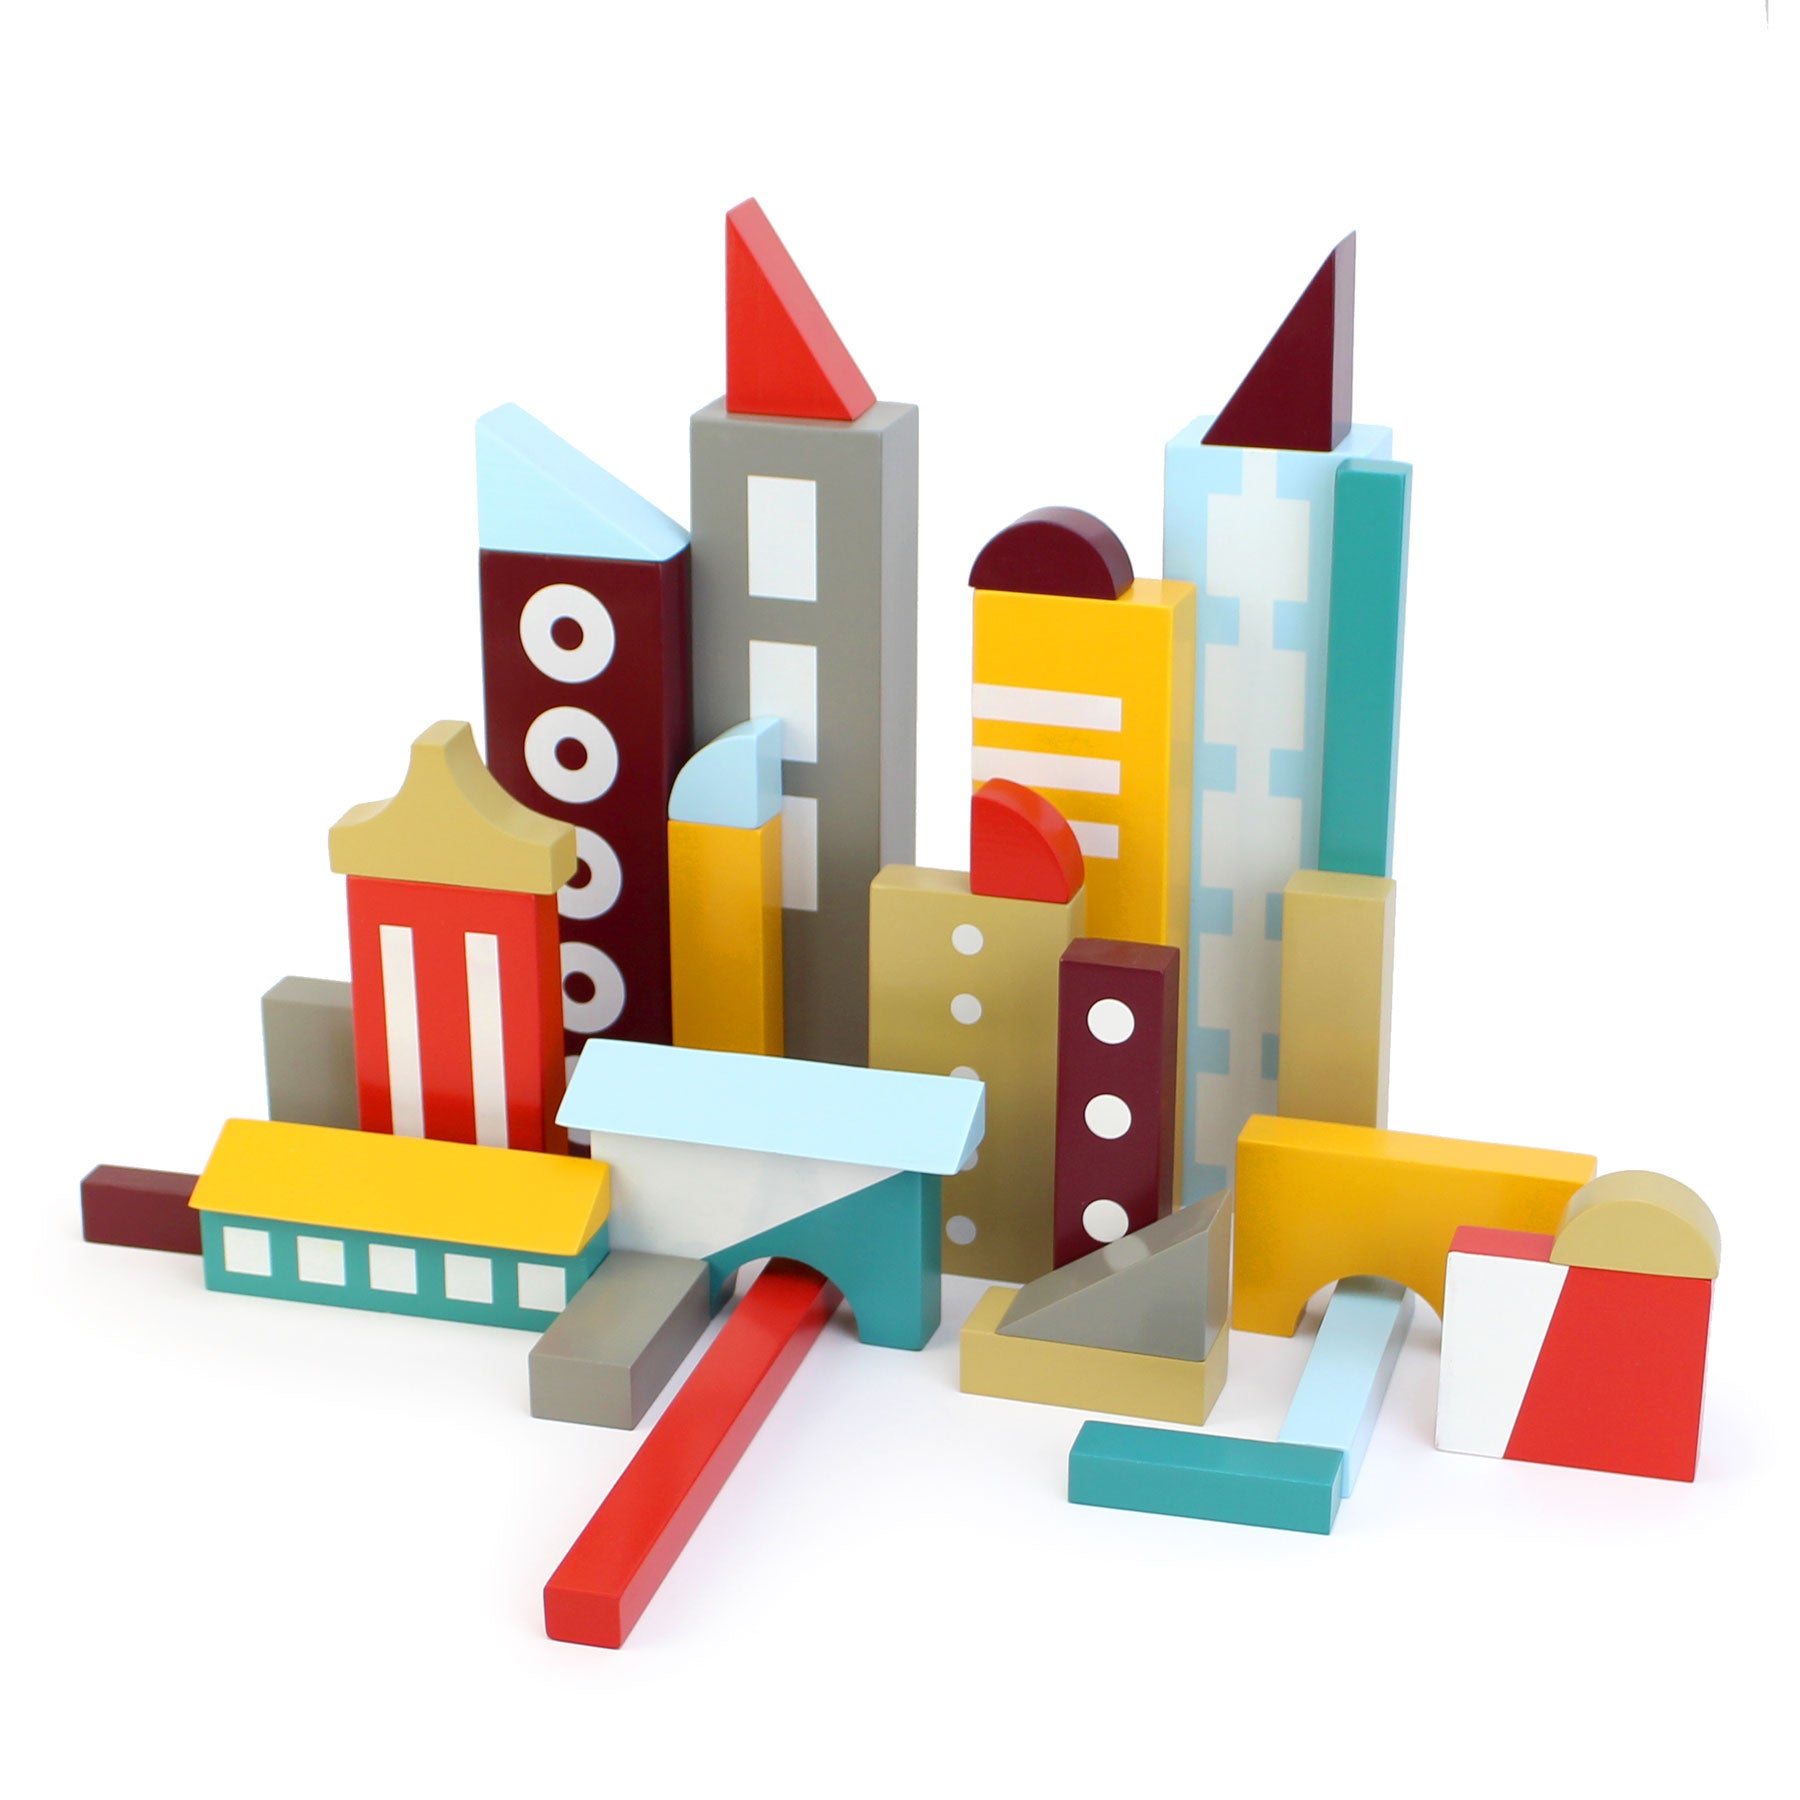 Floris Hovers Archiblocks Block Set Construction Set Toys beamalevich architecture gift design gift art gift